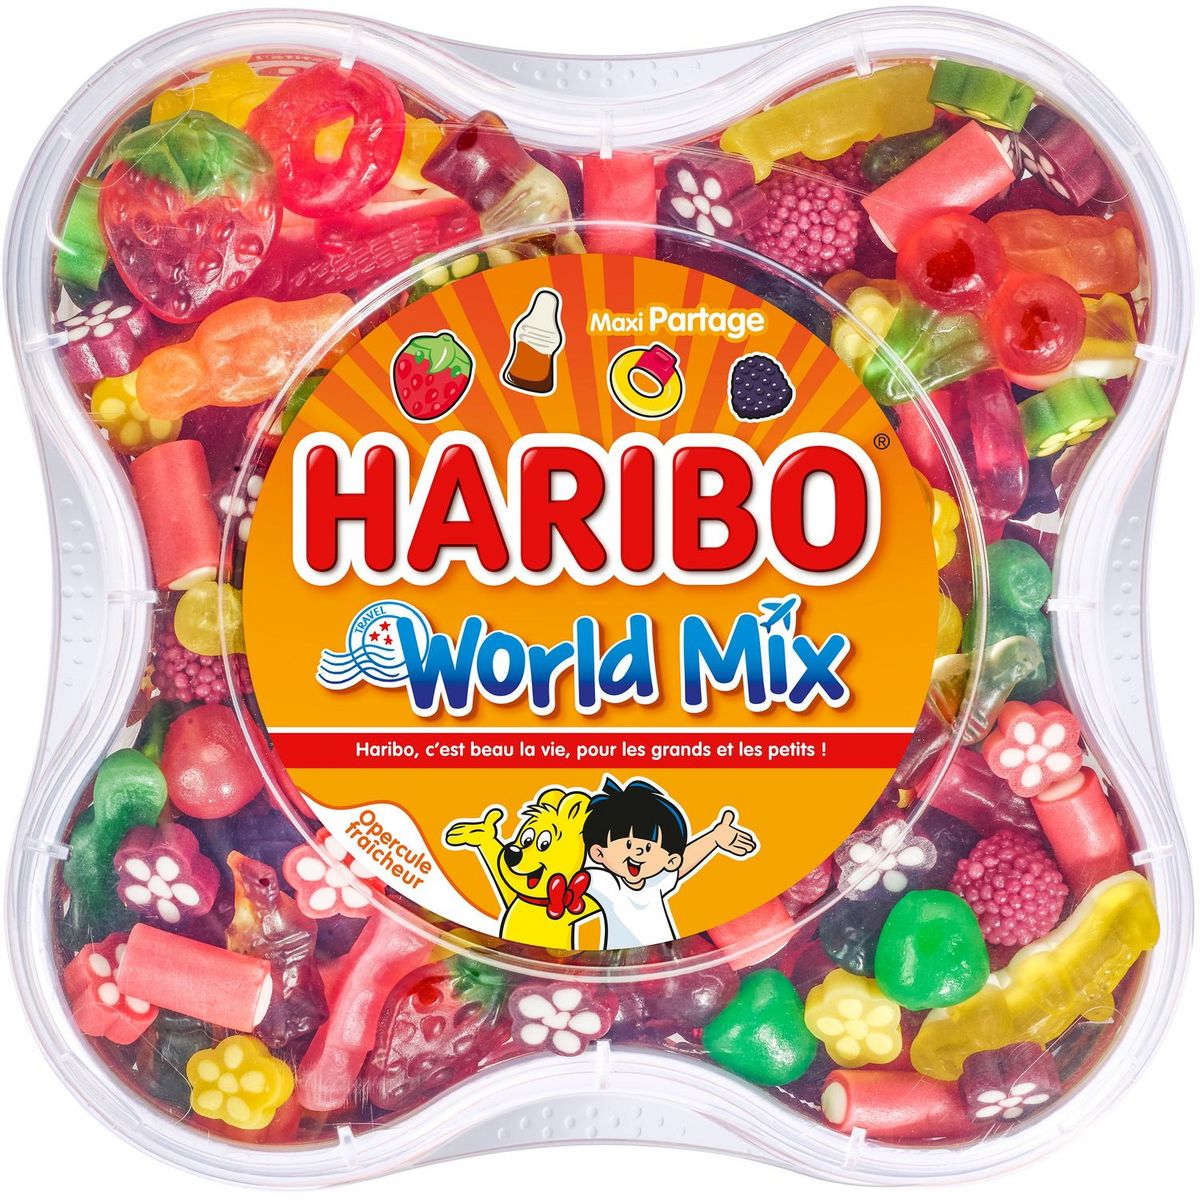 HARIBO World mix assortiment de bonbons boite 750g pas cher 